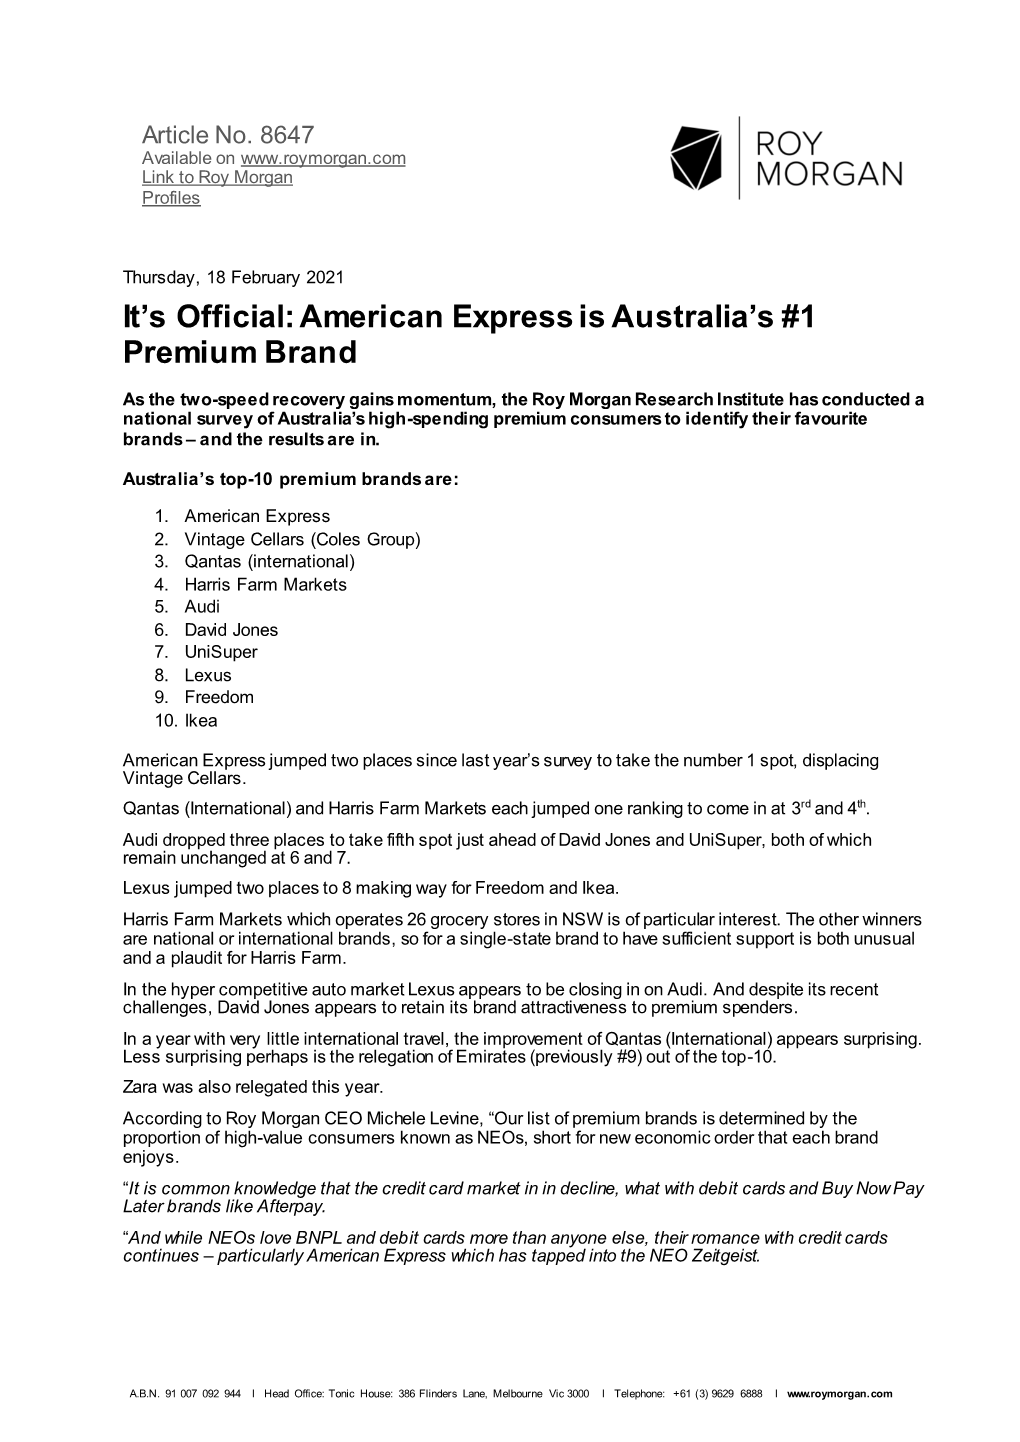 American Express Is Australia's #1 Premium Brand